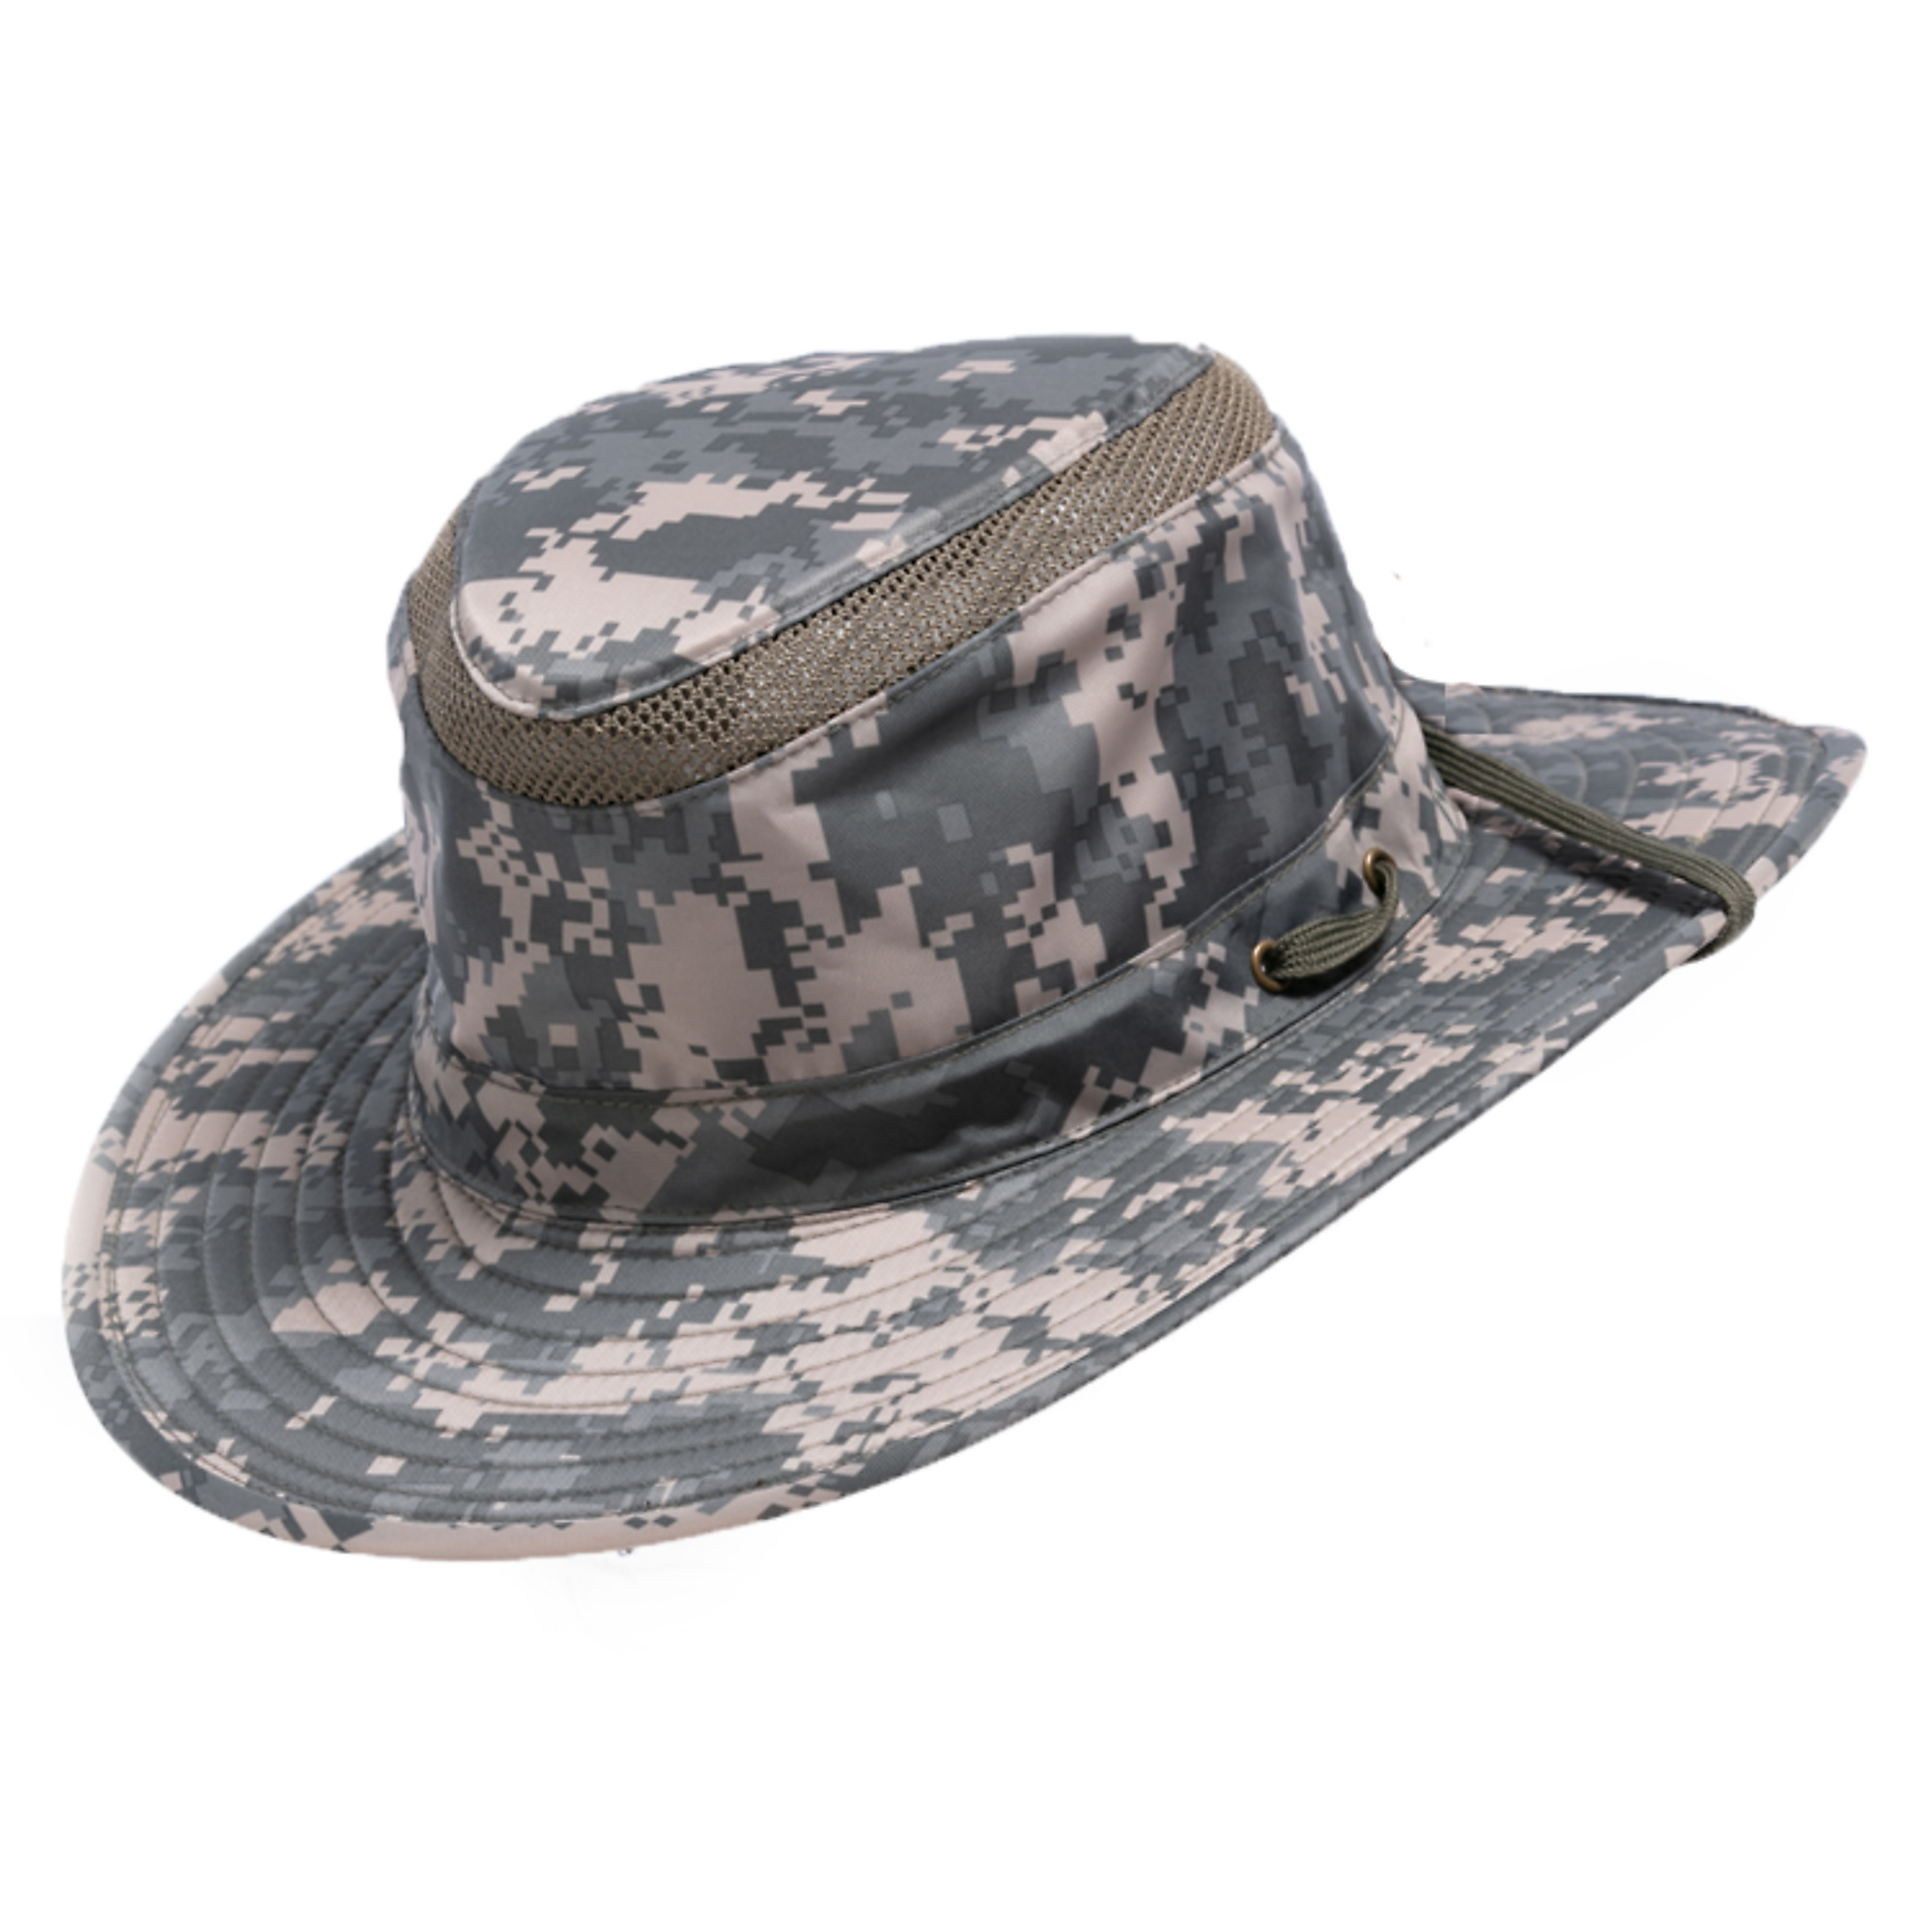 Henschel Hat Company, Digital Camo Camper Booney Hat, Size M, Color Digital Camo, Hat Style Hat, Model 5552-33M